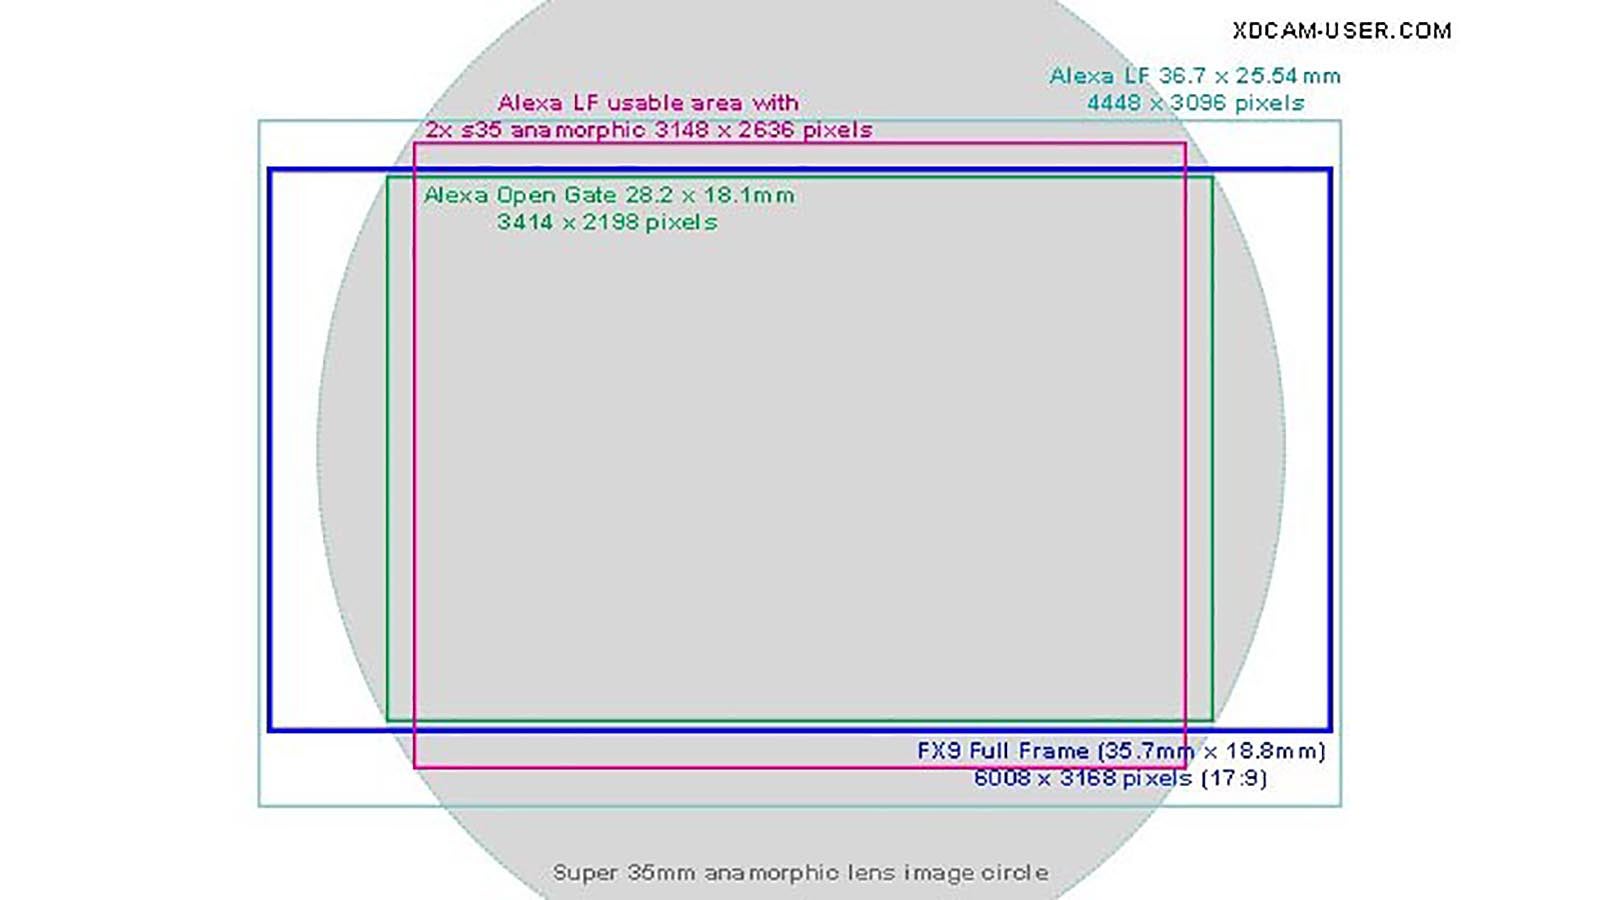 FX9-Image-circle-frame-lines2-1600.jpg